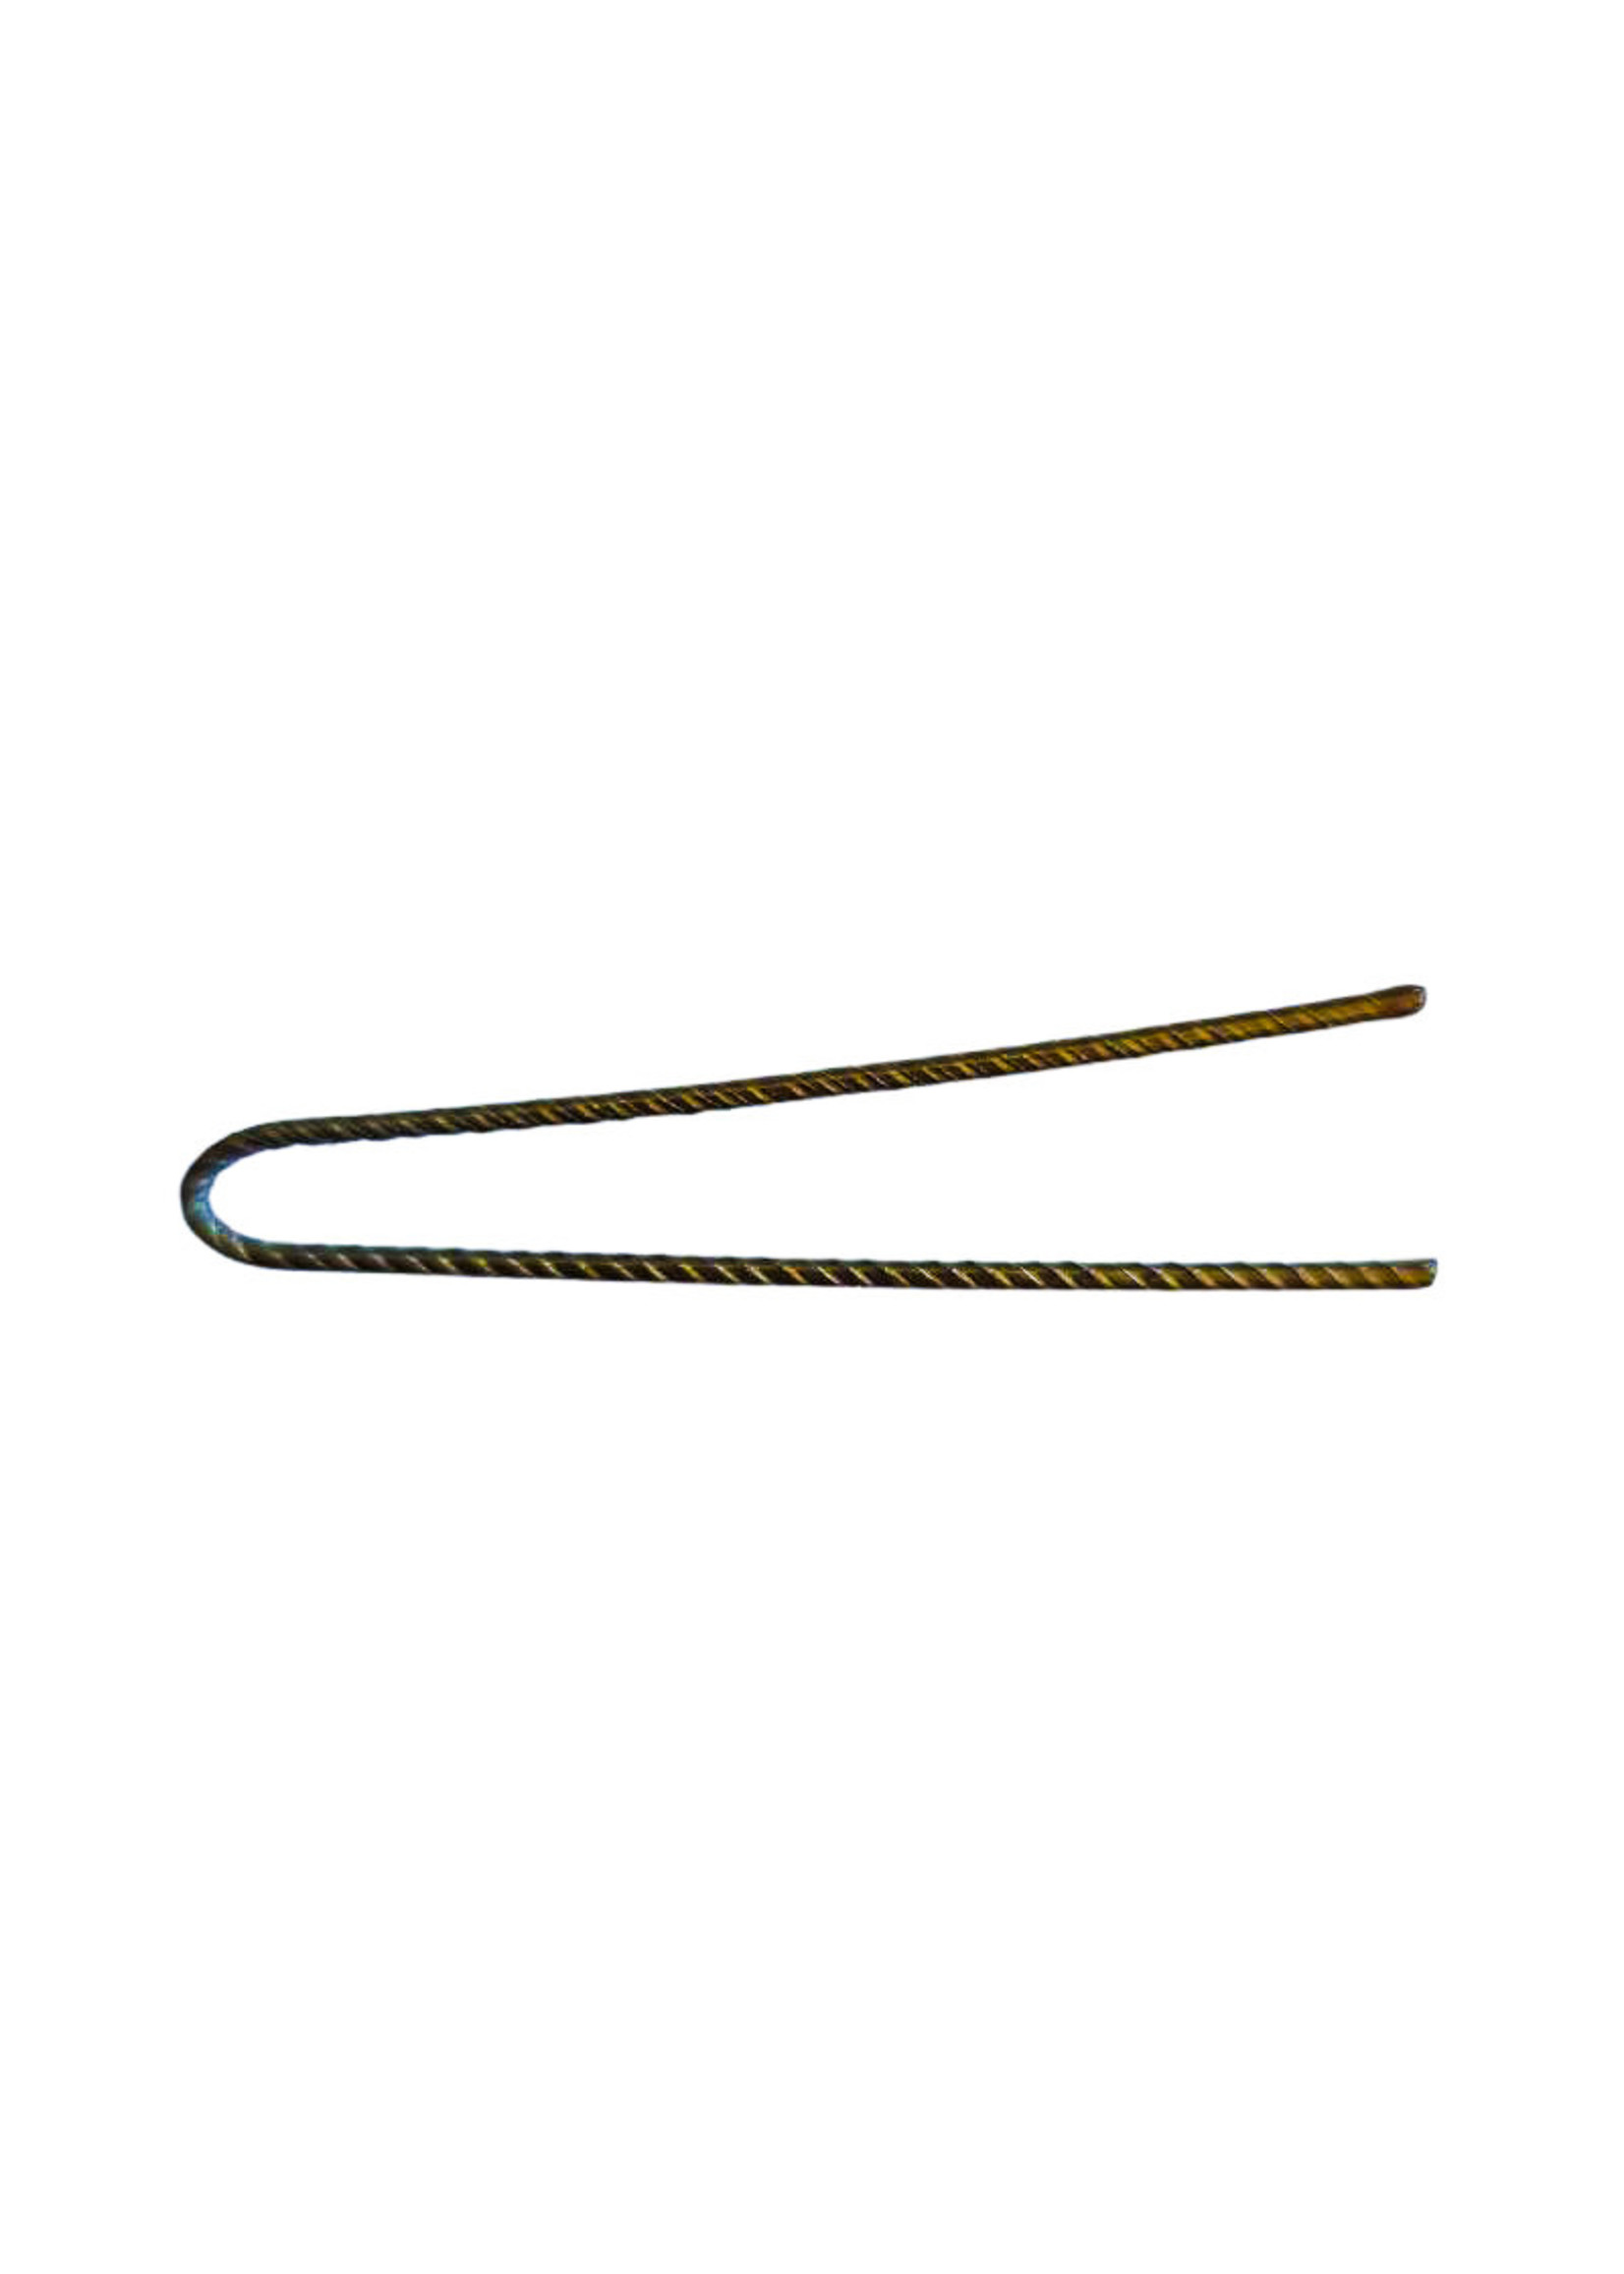 Bull Pins Ripple Pins 2 Inch (50mm) Bronze 250g Tub